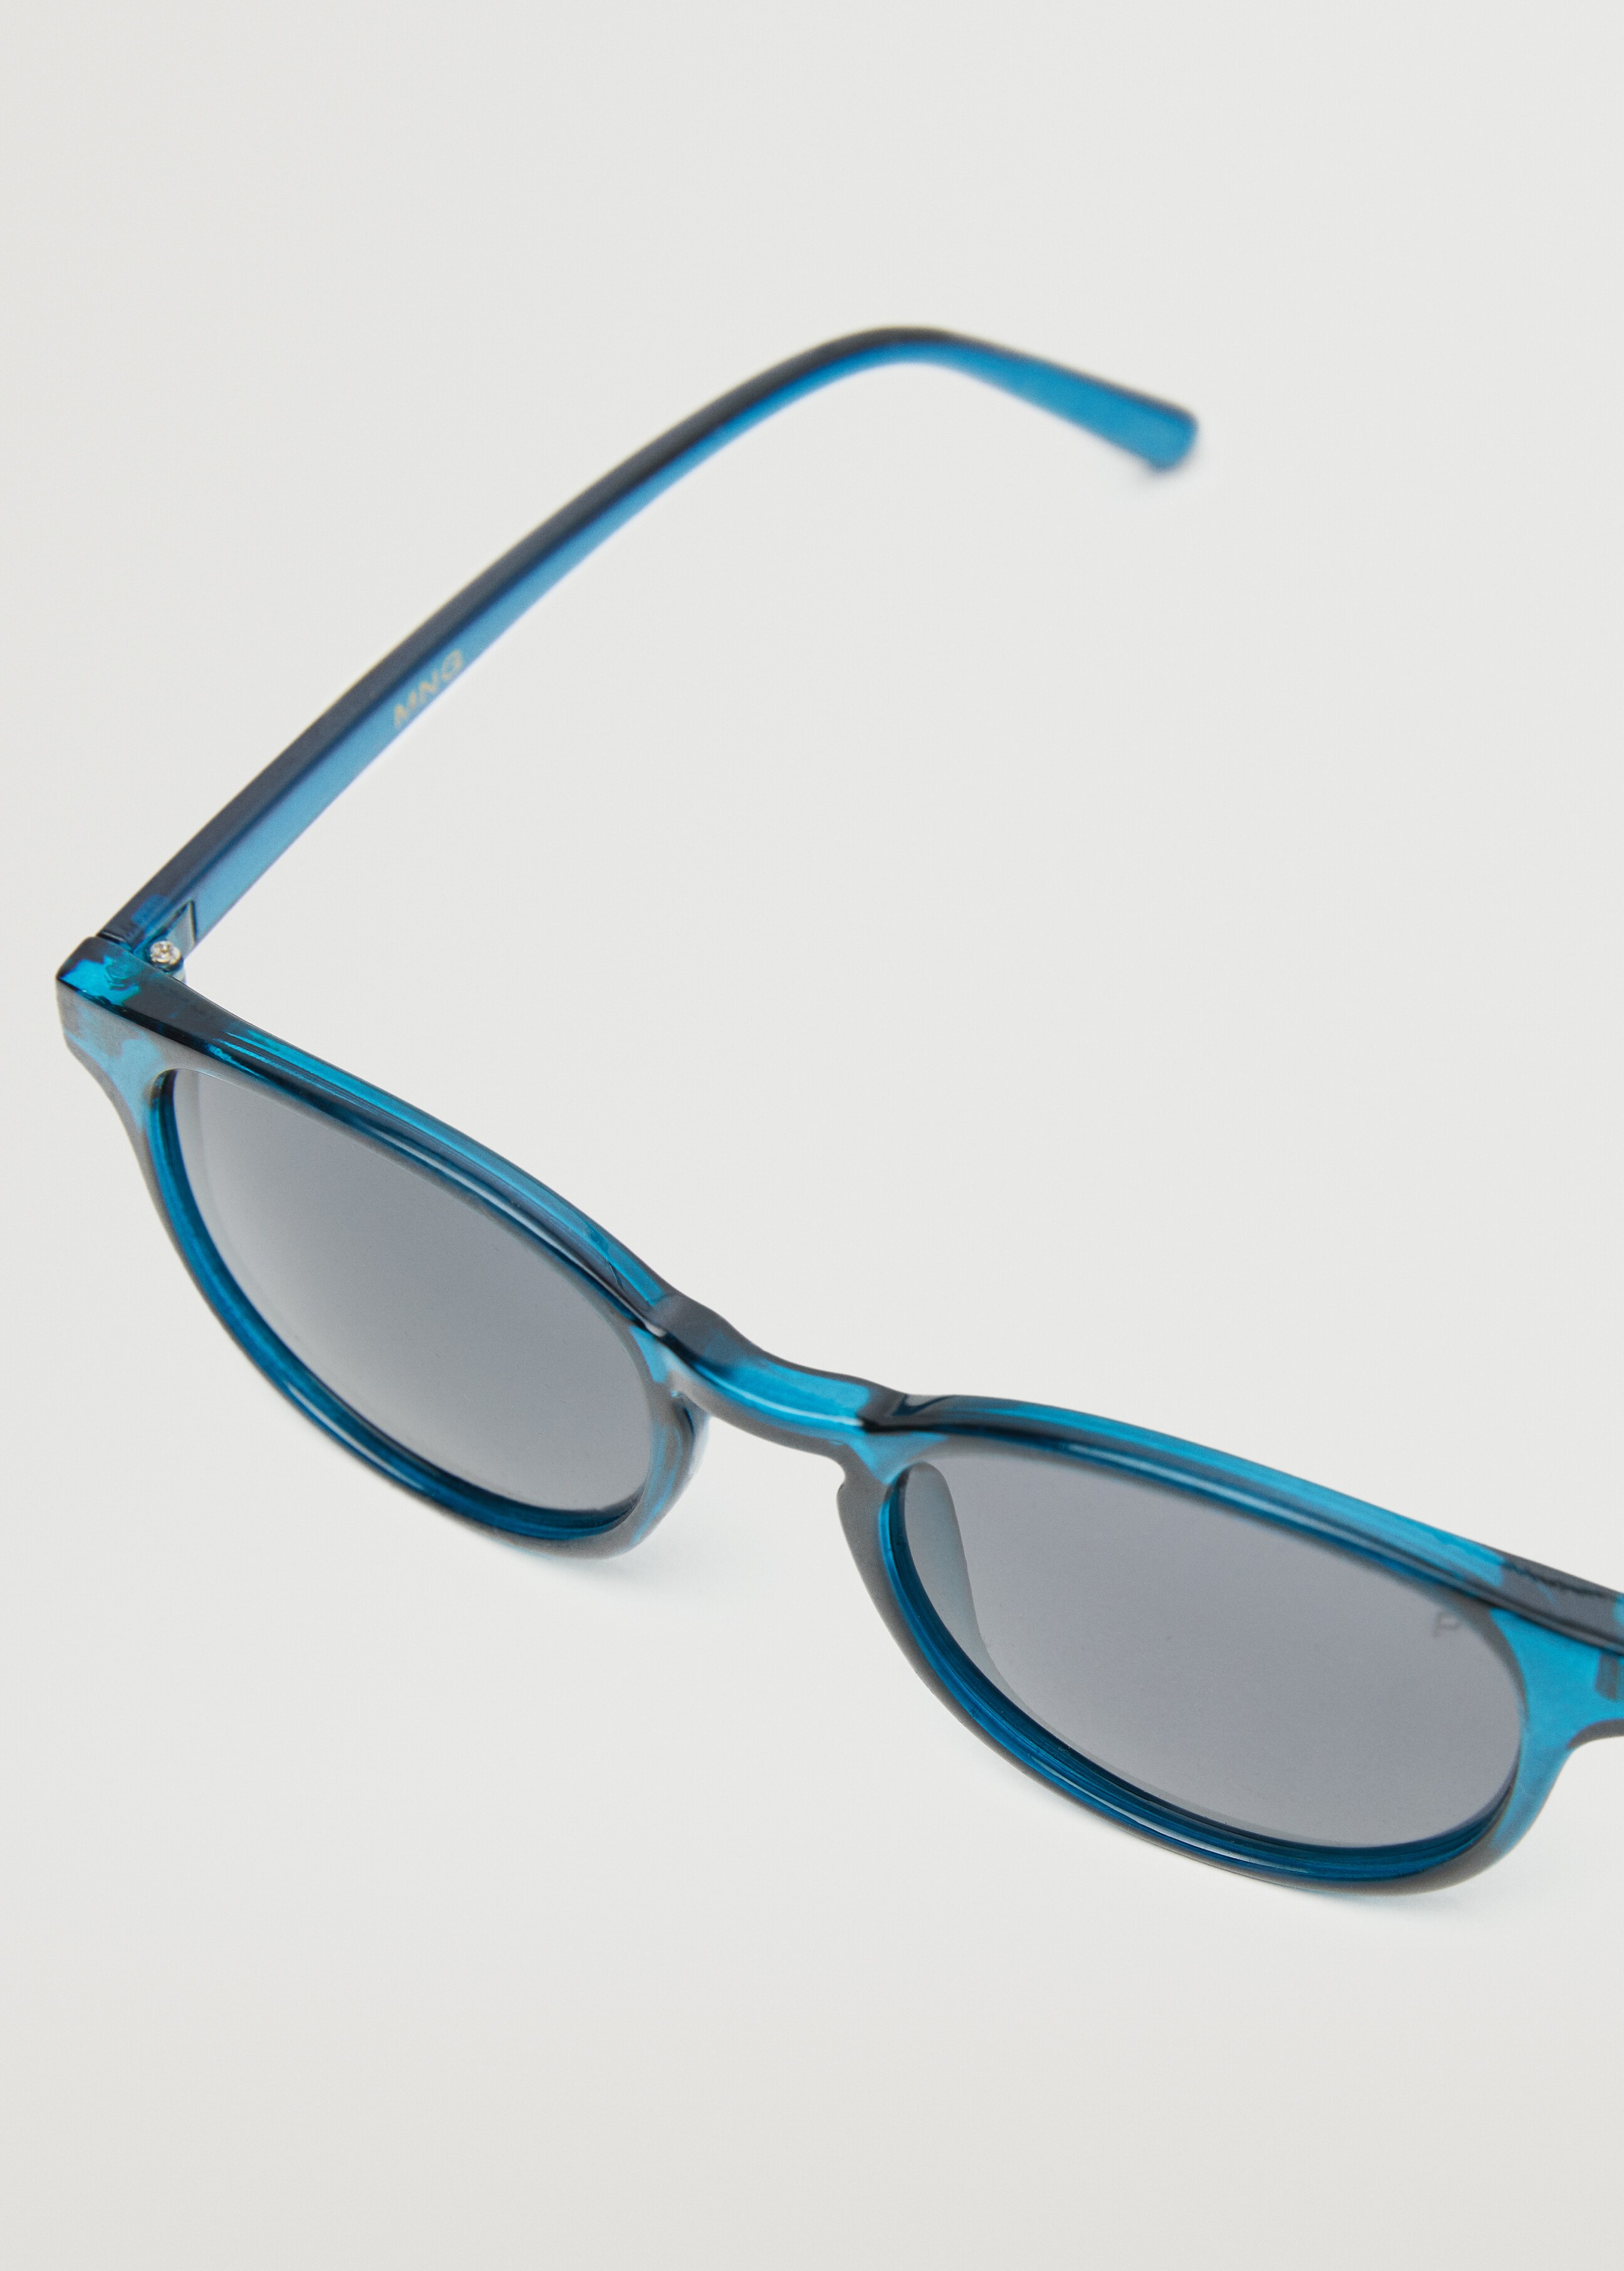 Polarised sunglasses - Details of the article 3